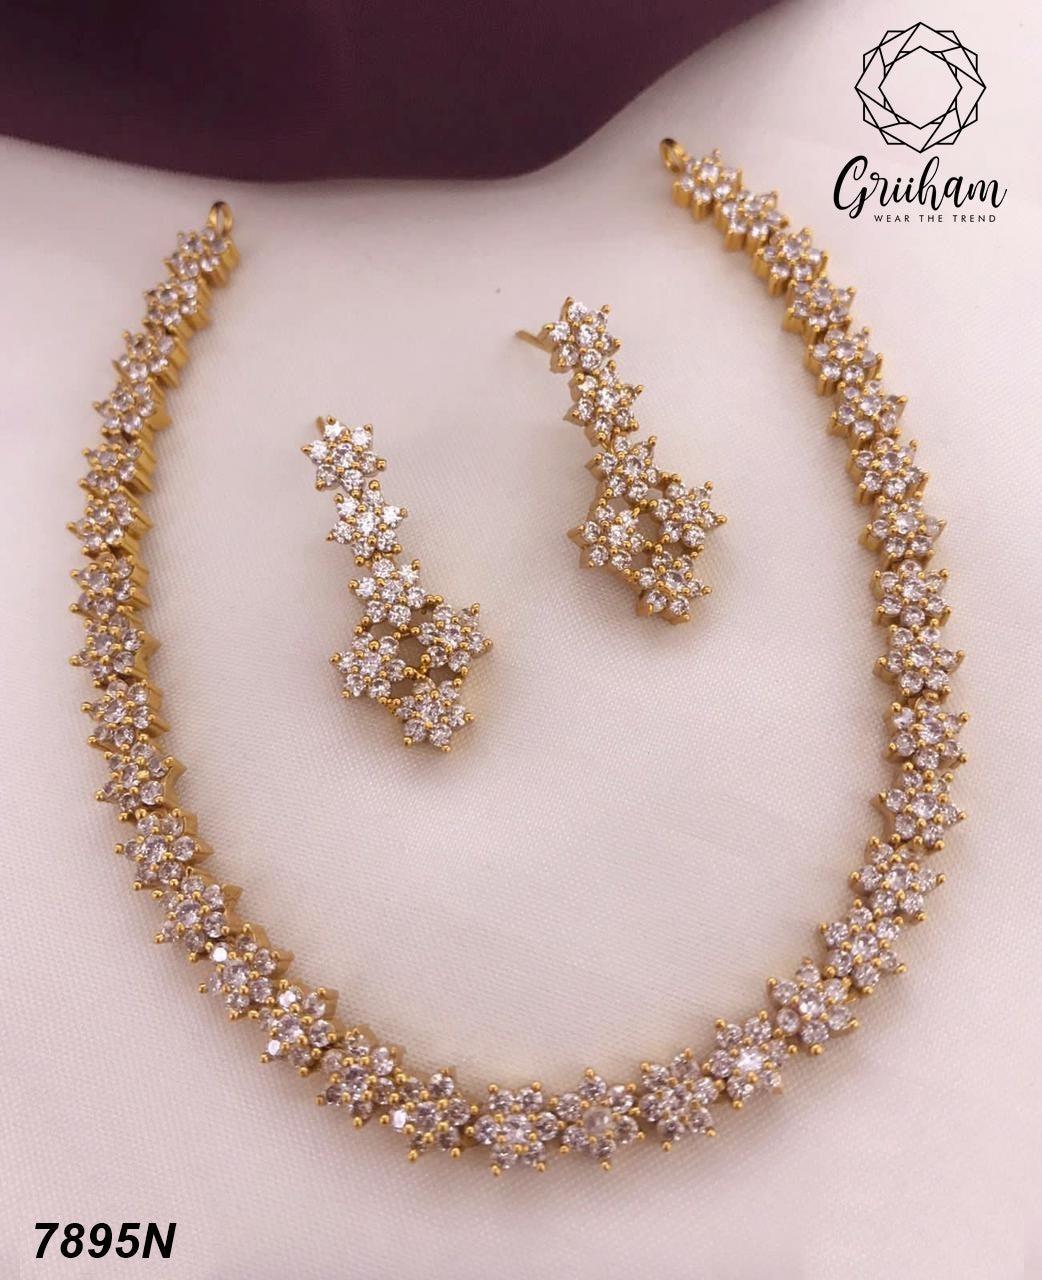 Premium White Gold cz stones Necklace set 7894N-Necklace Set-Kanakam-White-Griiham